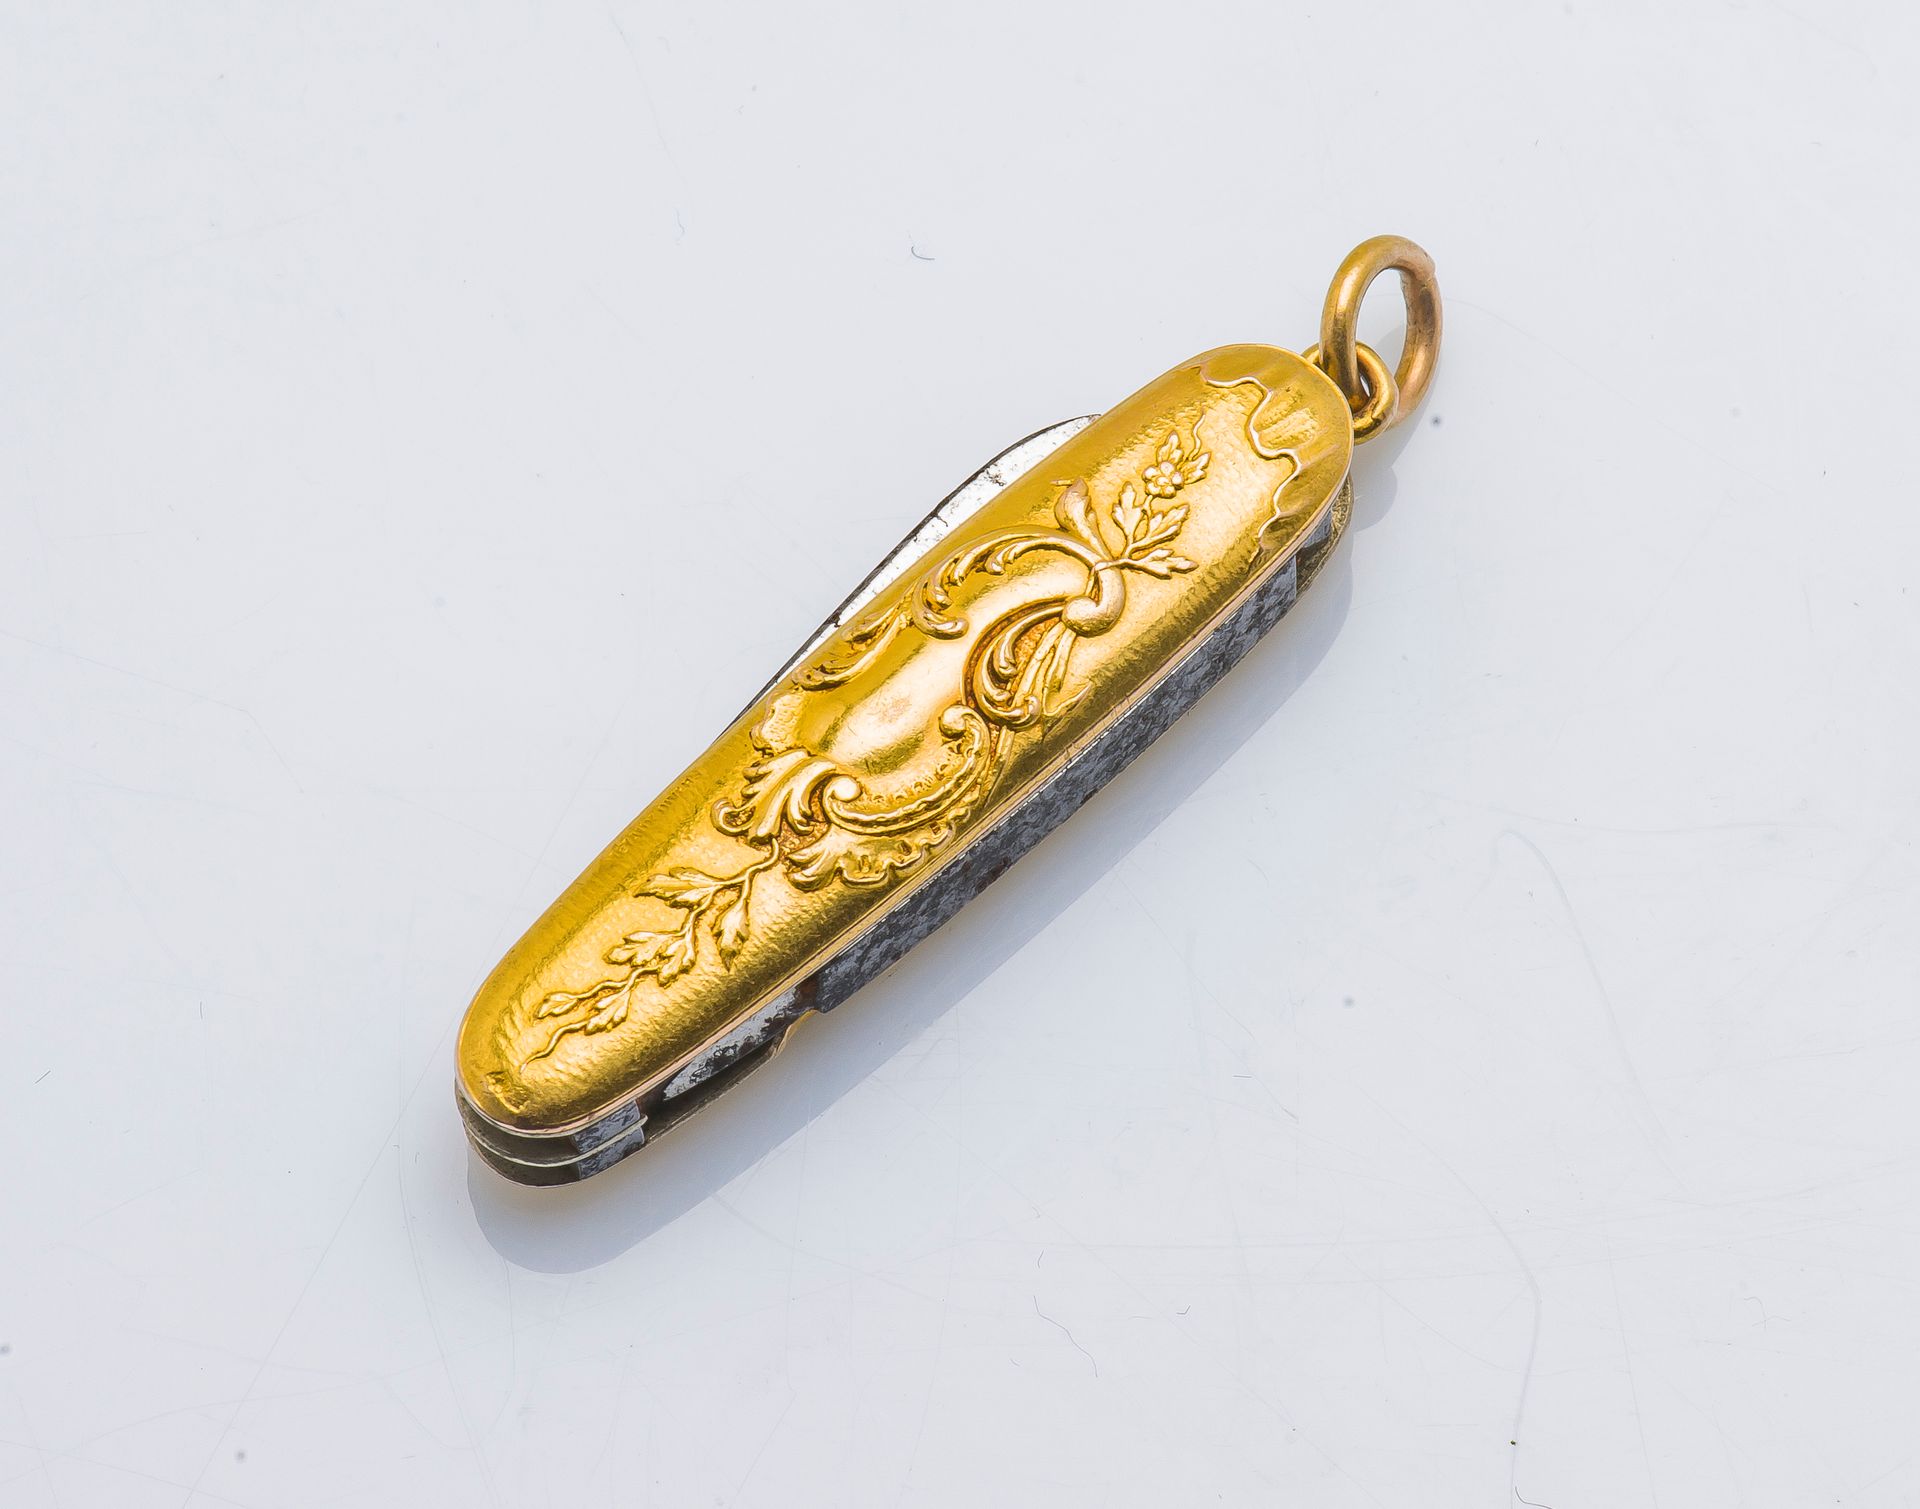 Null 18K黄金（千分之七十五）瑞士刀吊坠，饰以十字花纹装饰。金属中的系统。19世纪的法国作品。

高度 : 4,5 cm 毛重 : 14,1 g